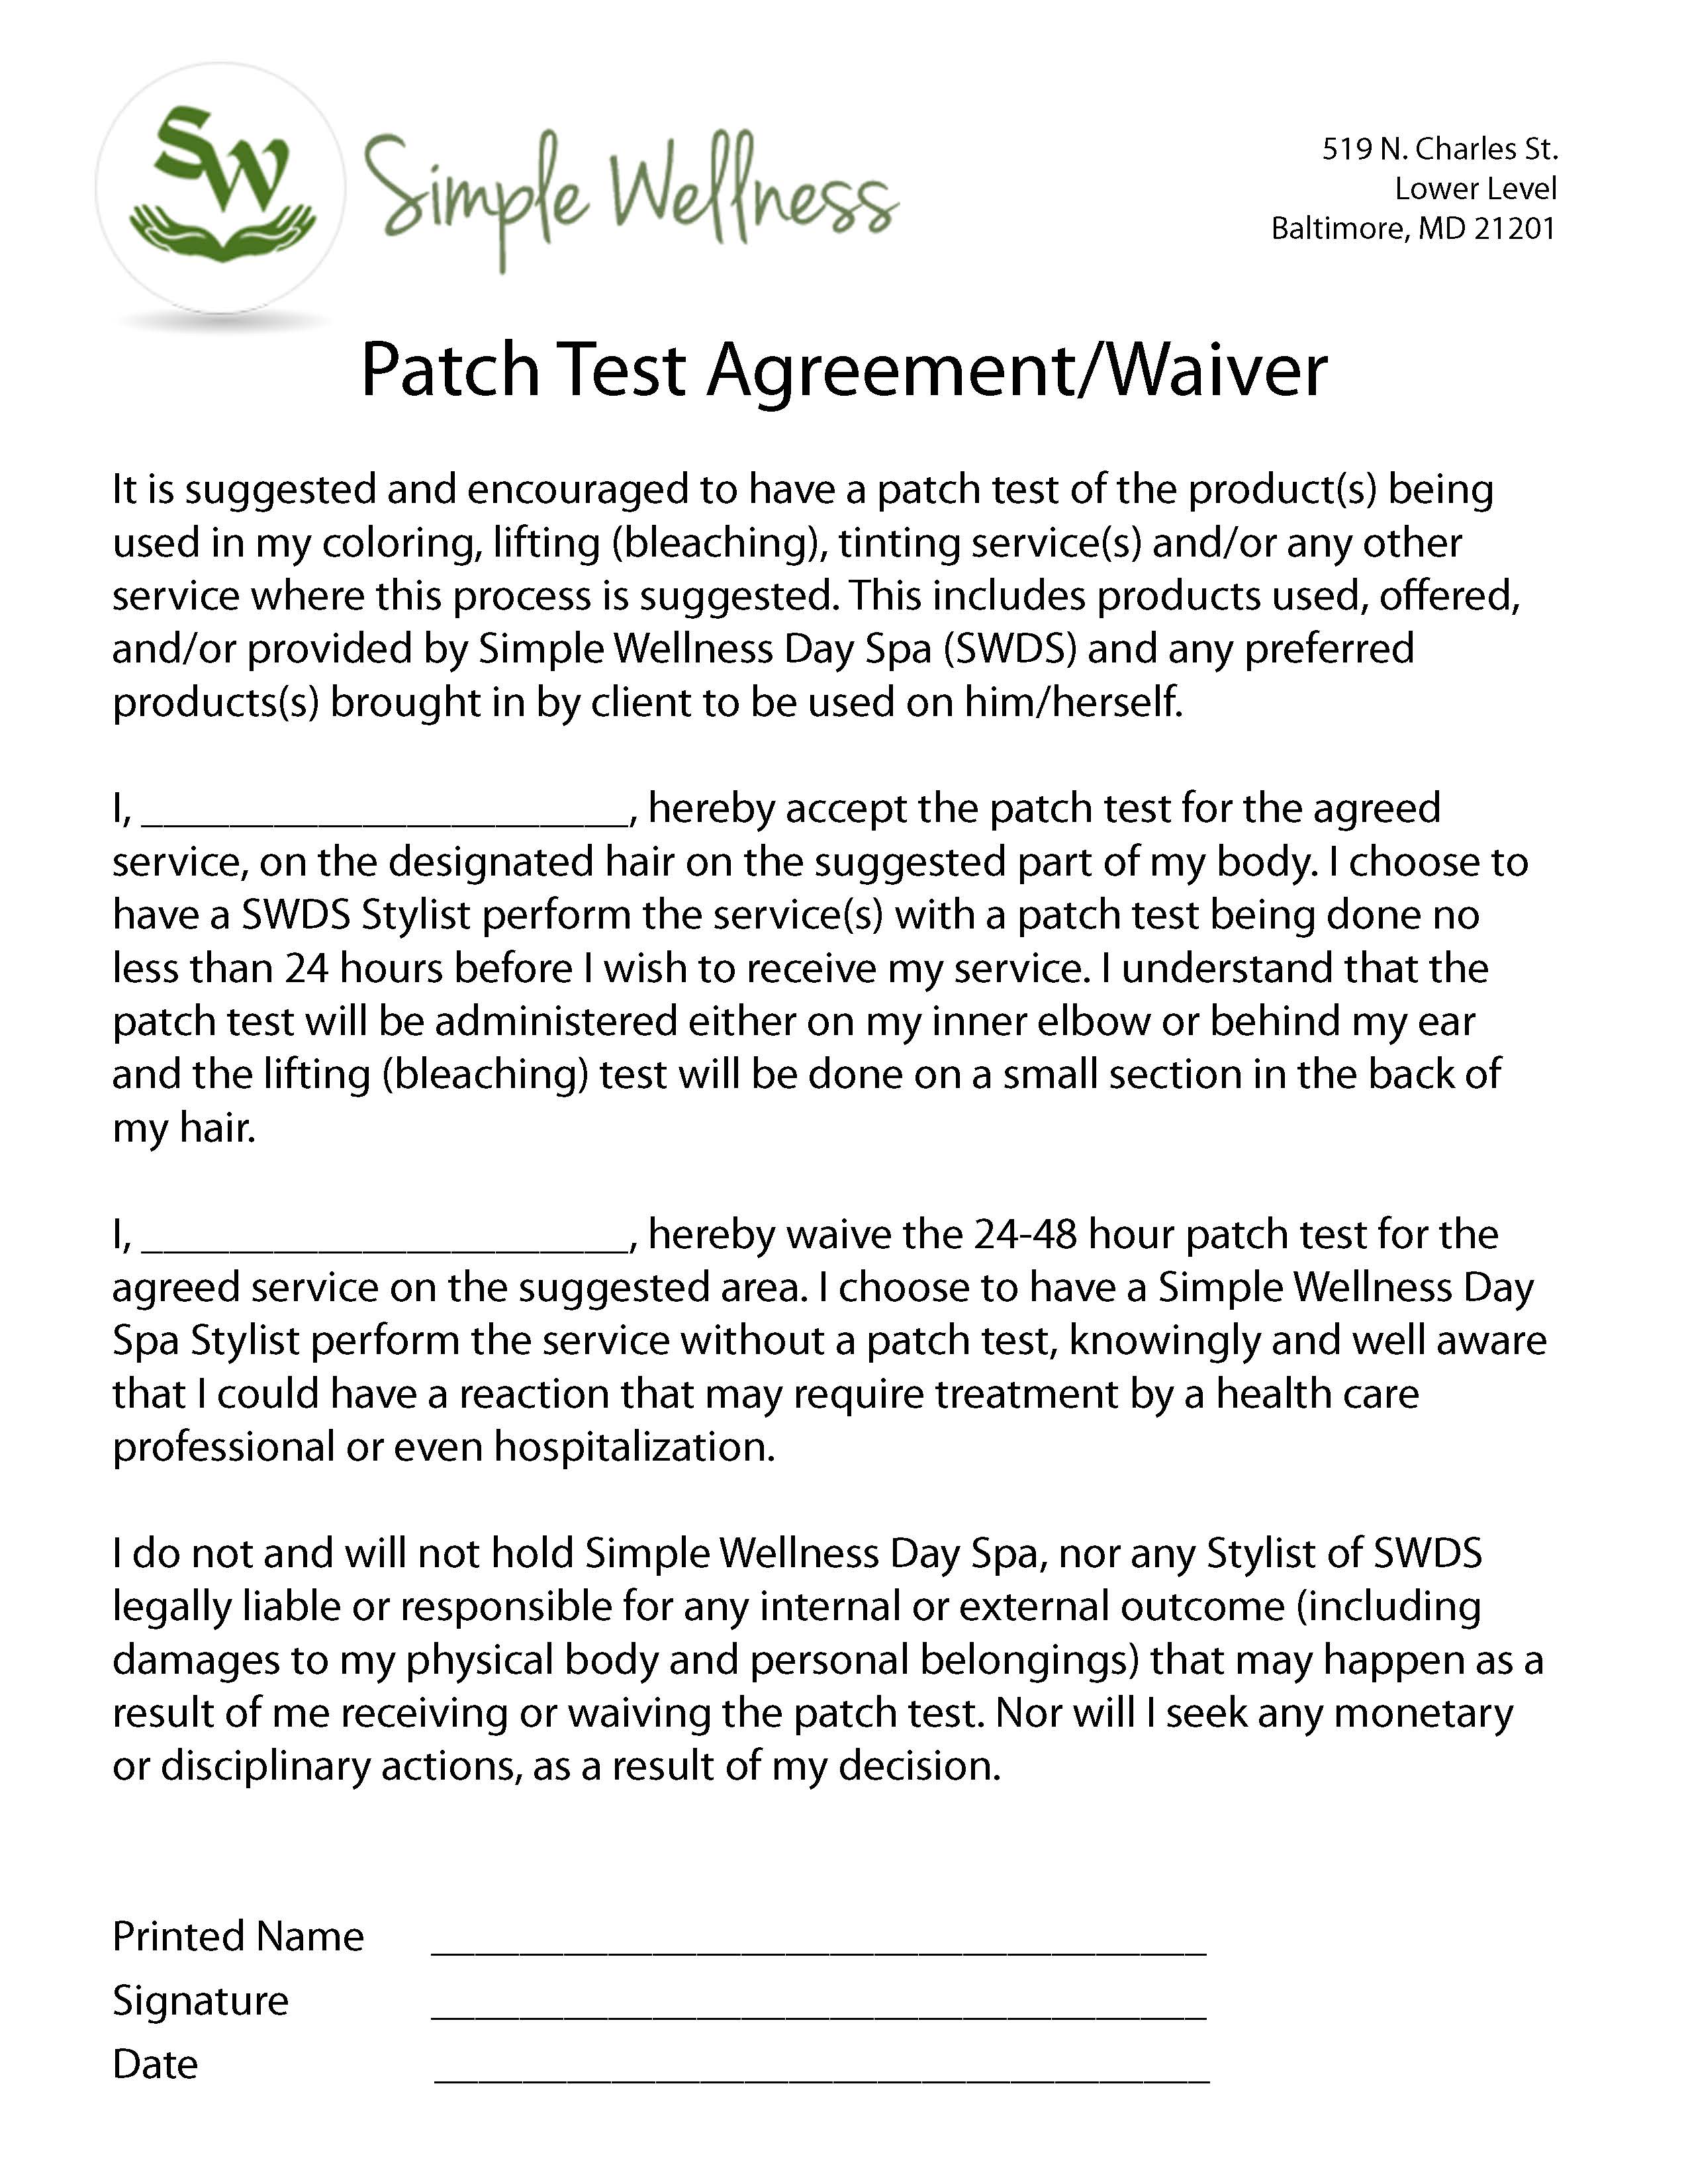 simple wellness patch test form.jpg